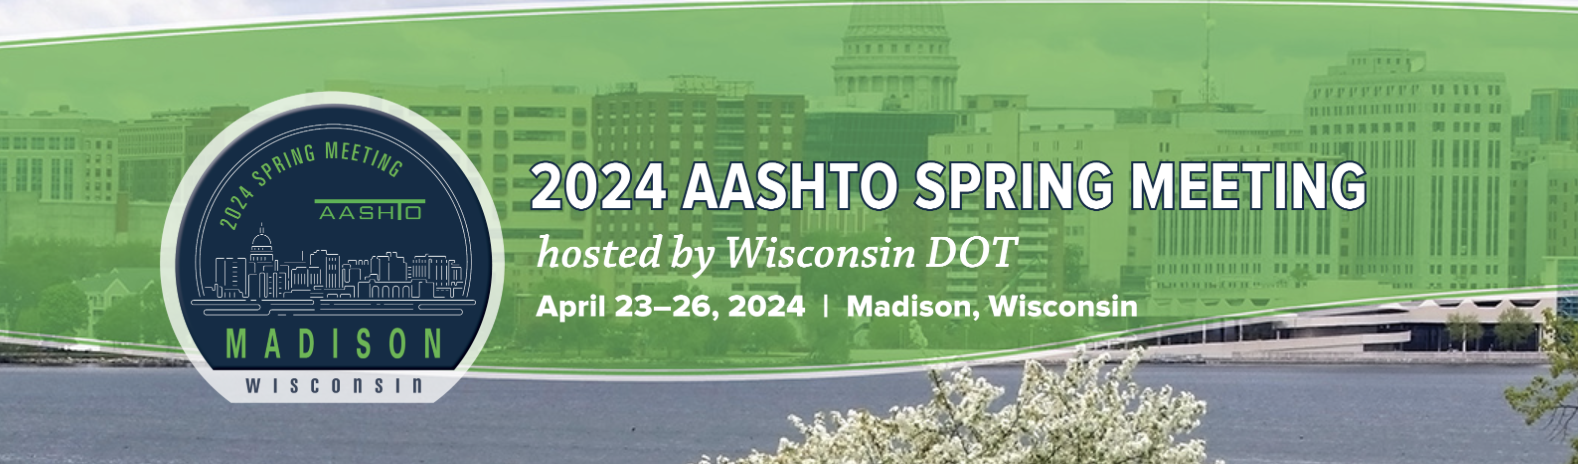 AASHTO Spring Meeting 2024